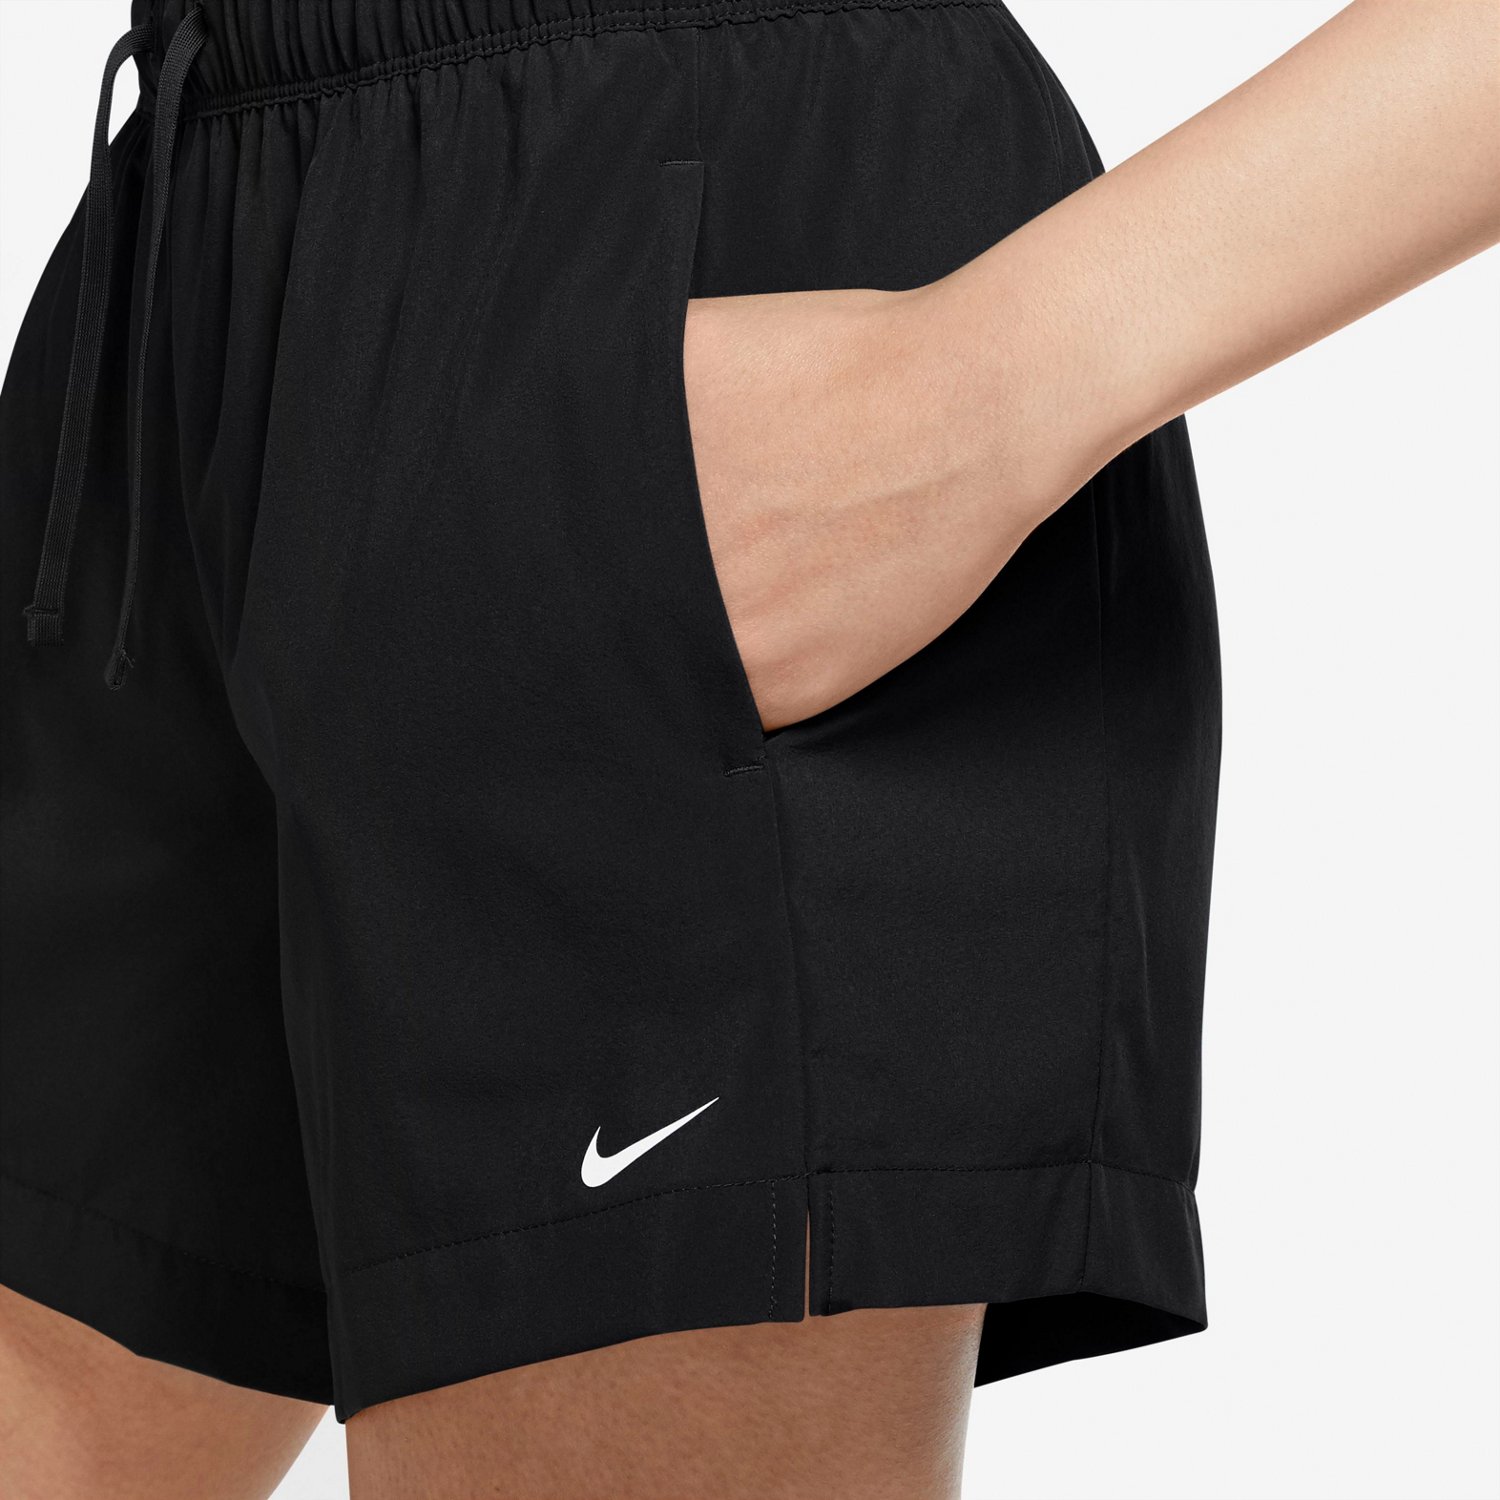 Nike Women's Flex 4 Training Shorts Academy Sports on Women Guides